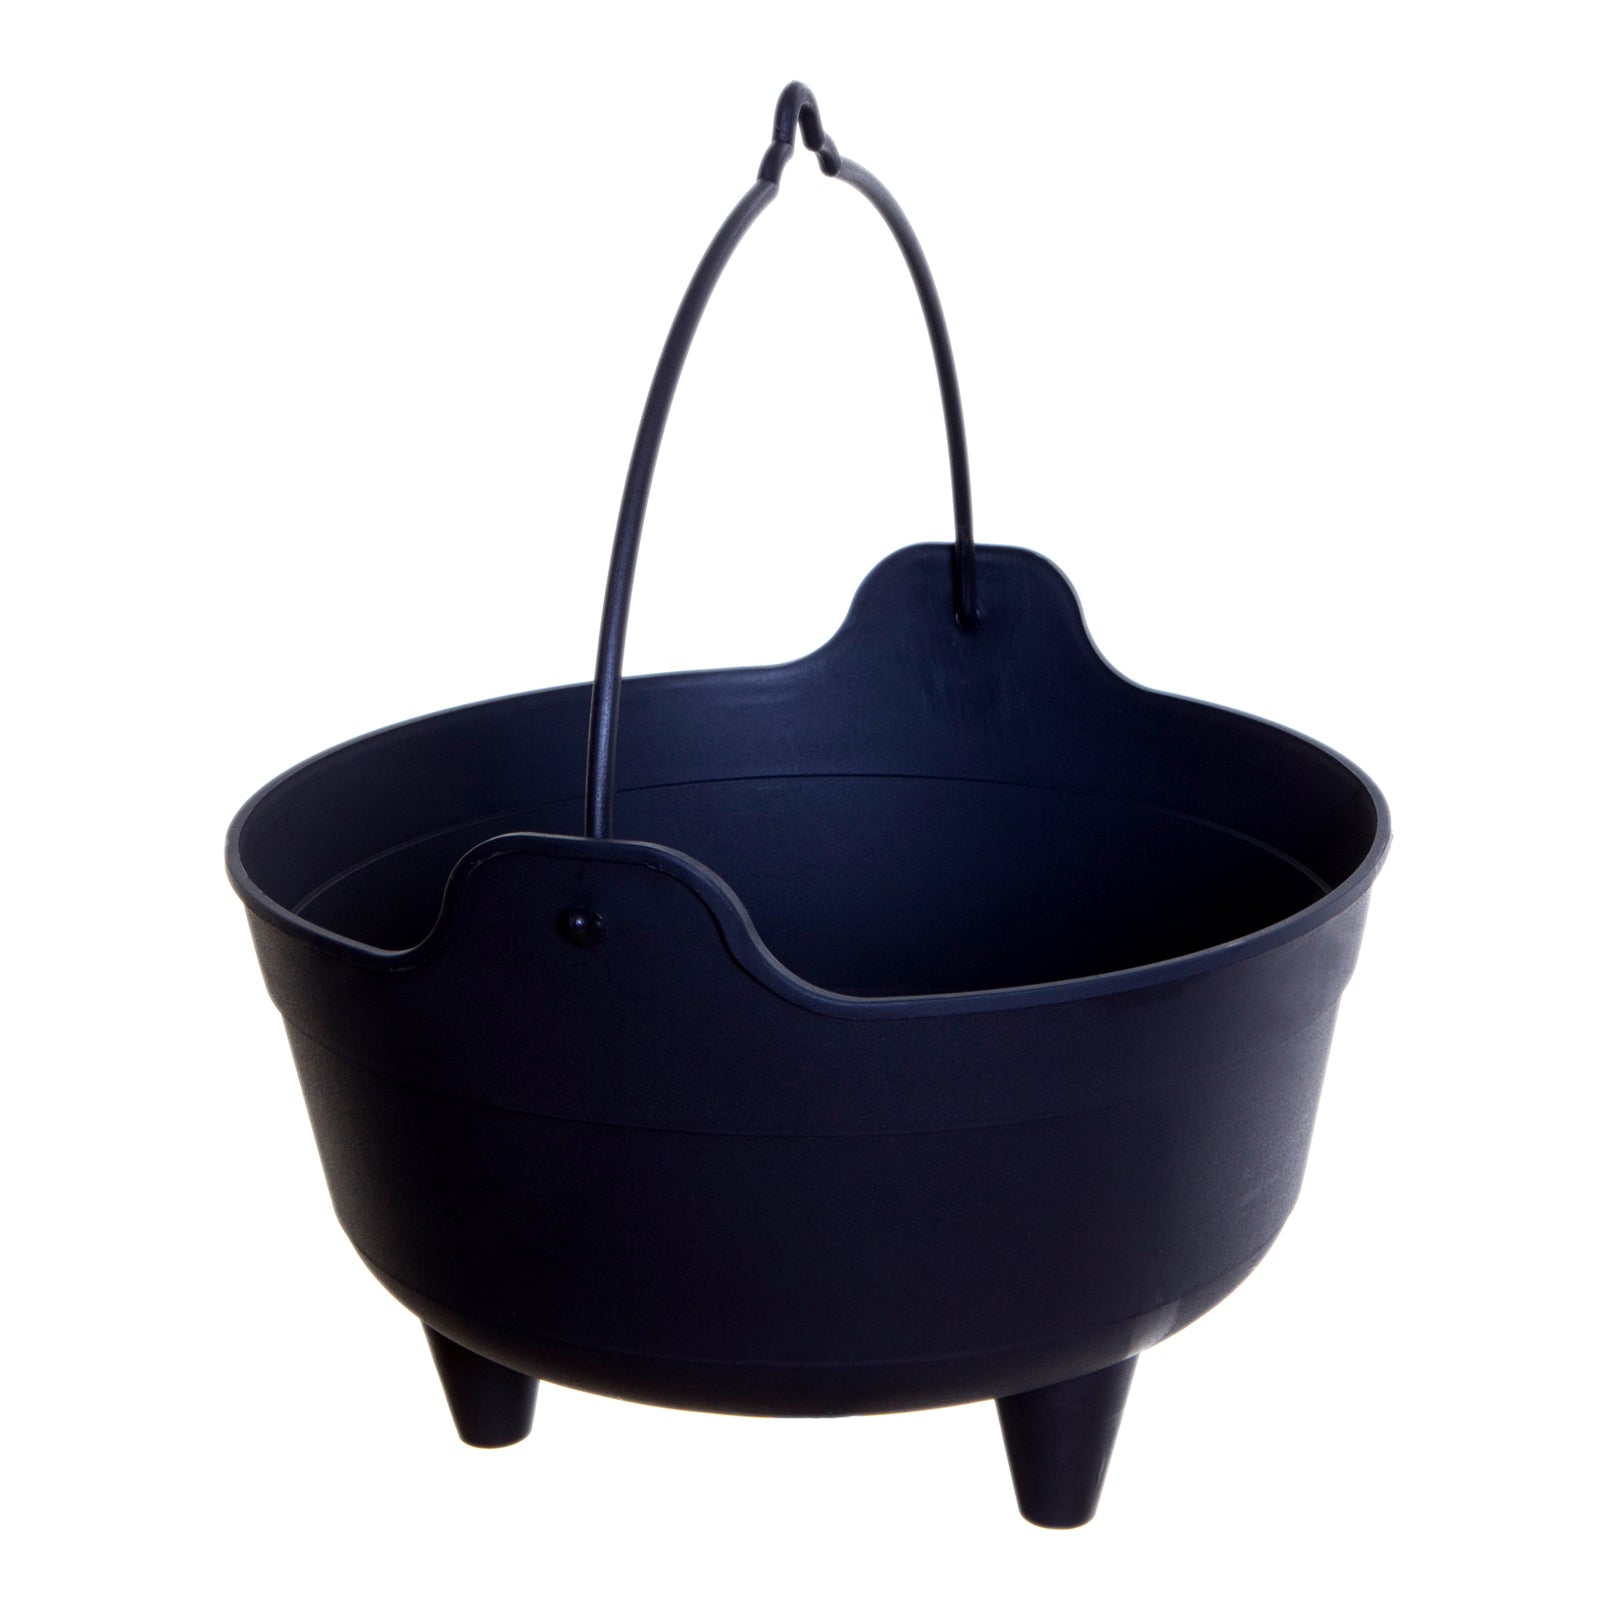 AMOS Cauldron for Gardening